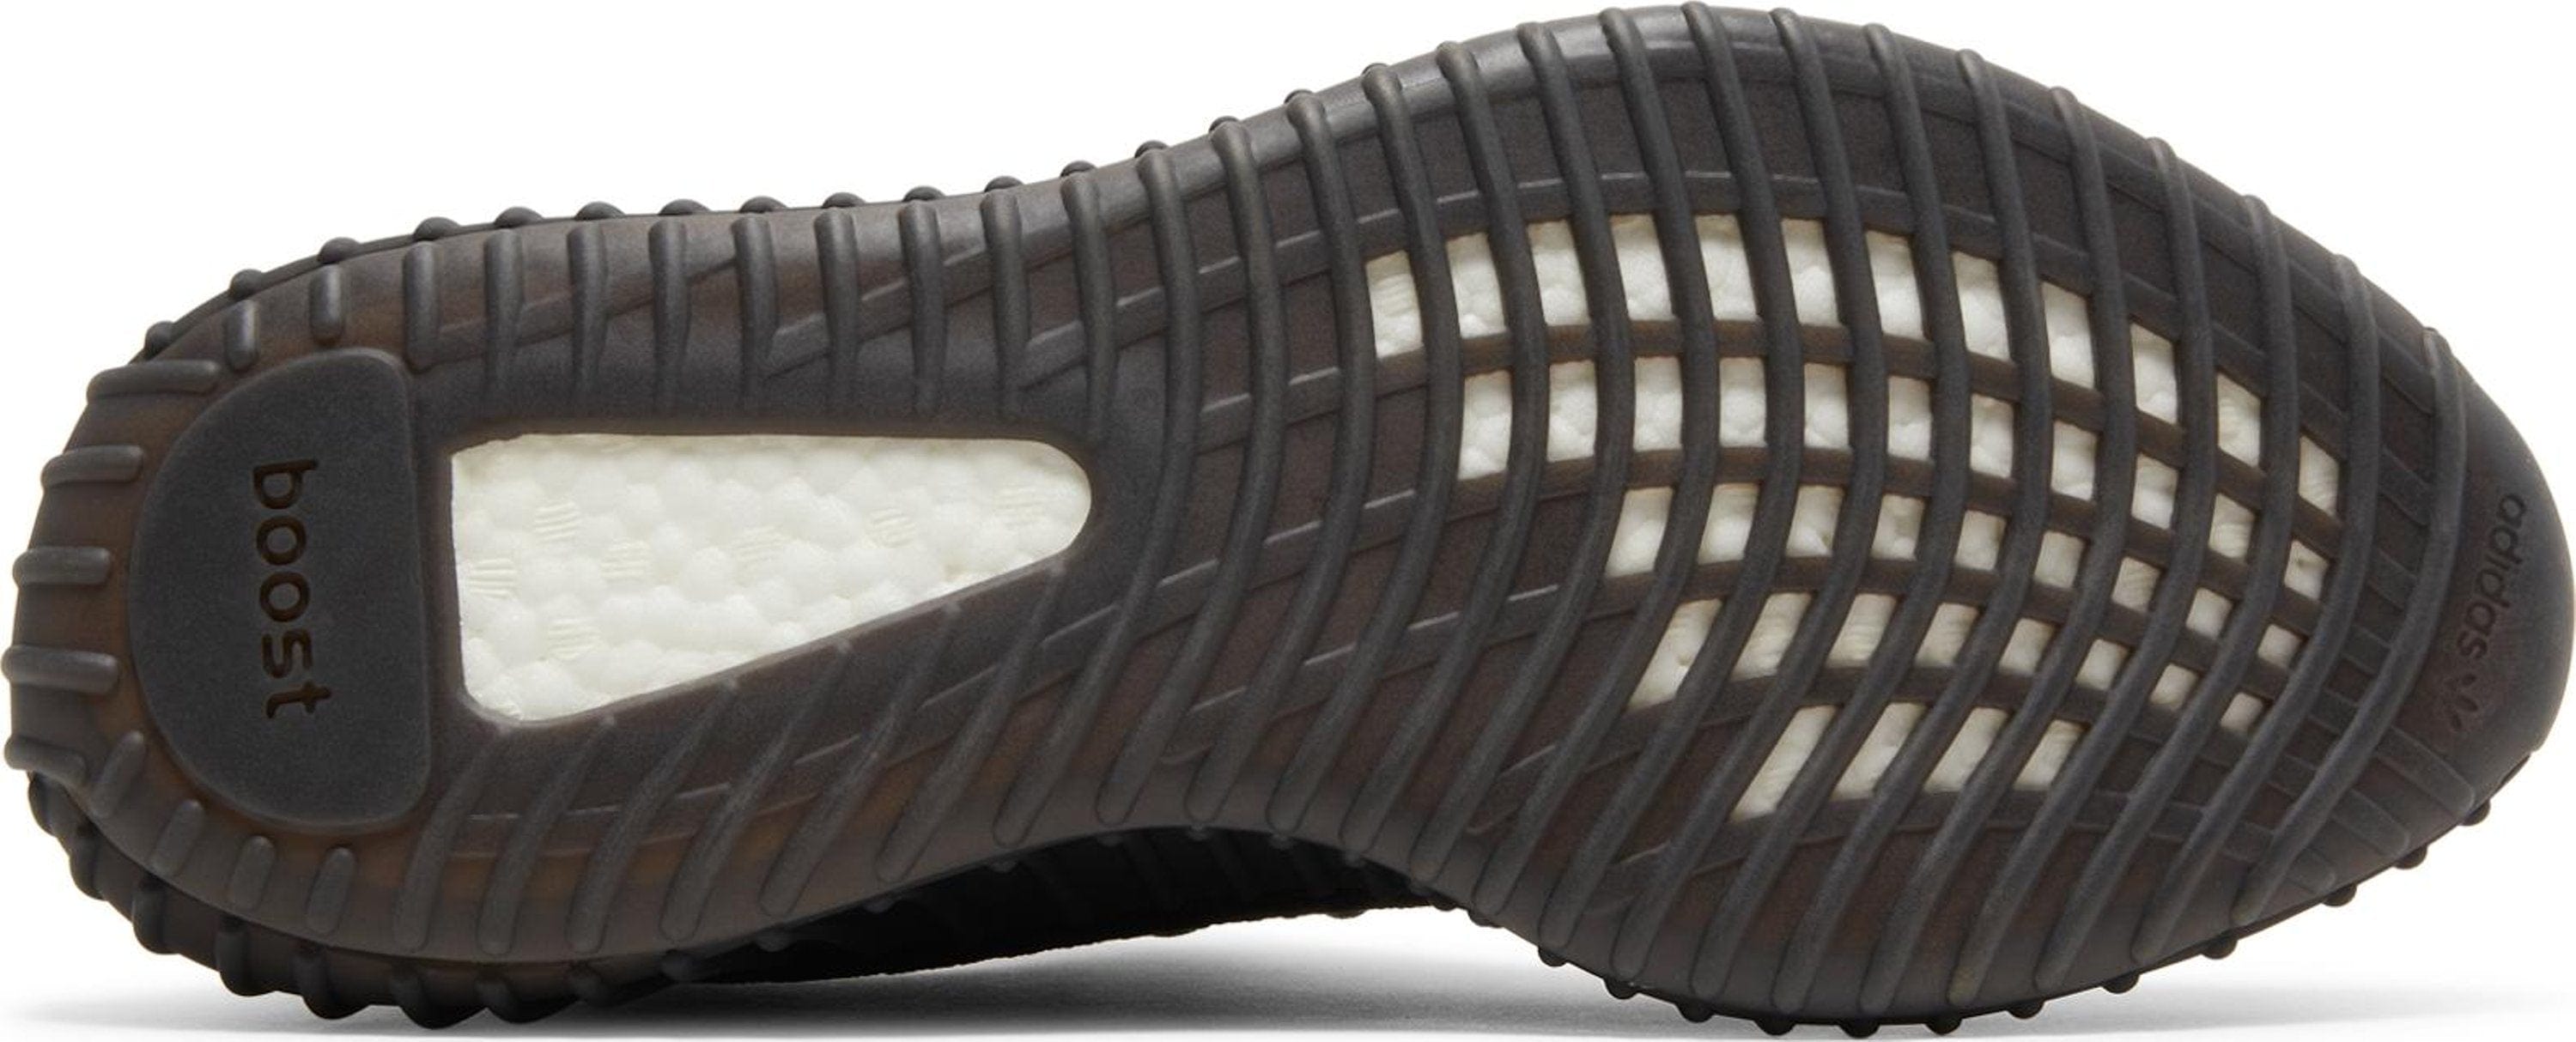 sneakers adidas Yeezy Boost 350 V2 Core Black White Oreo